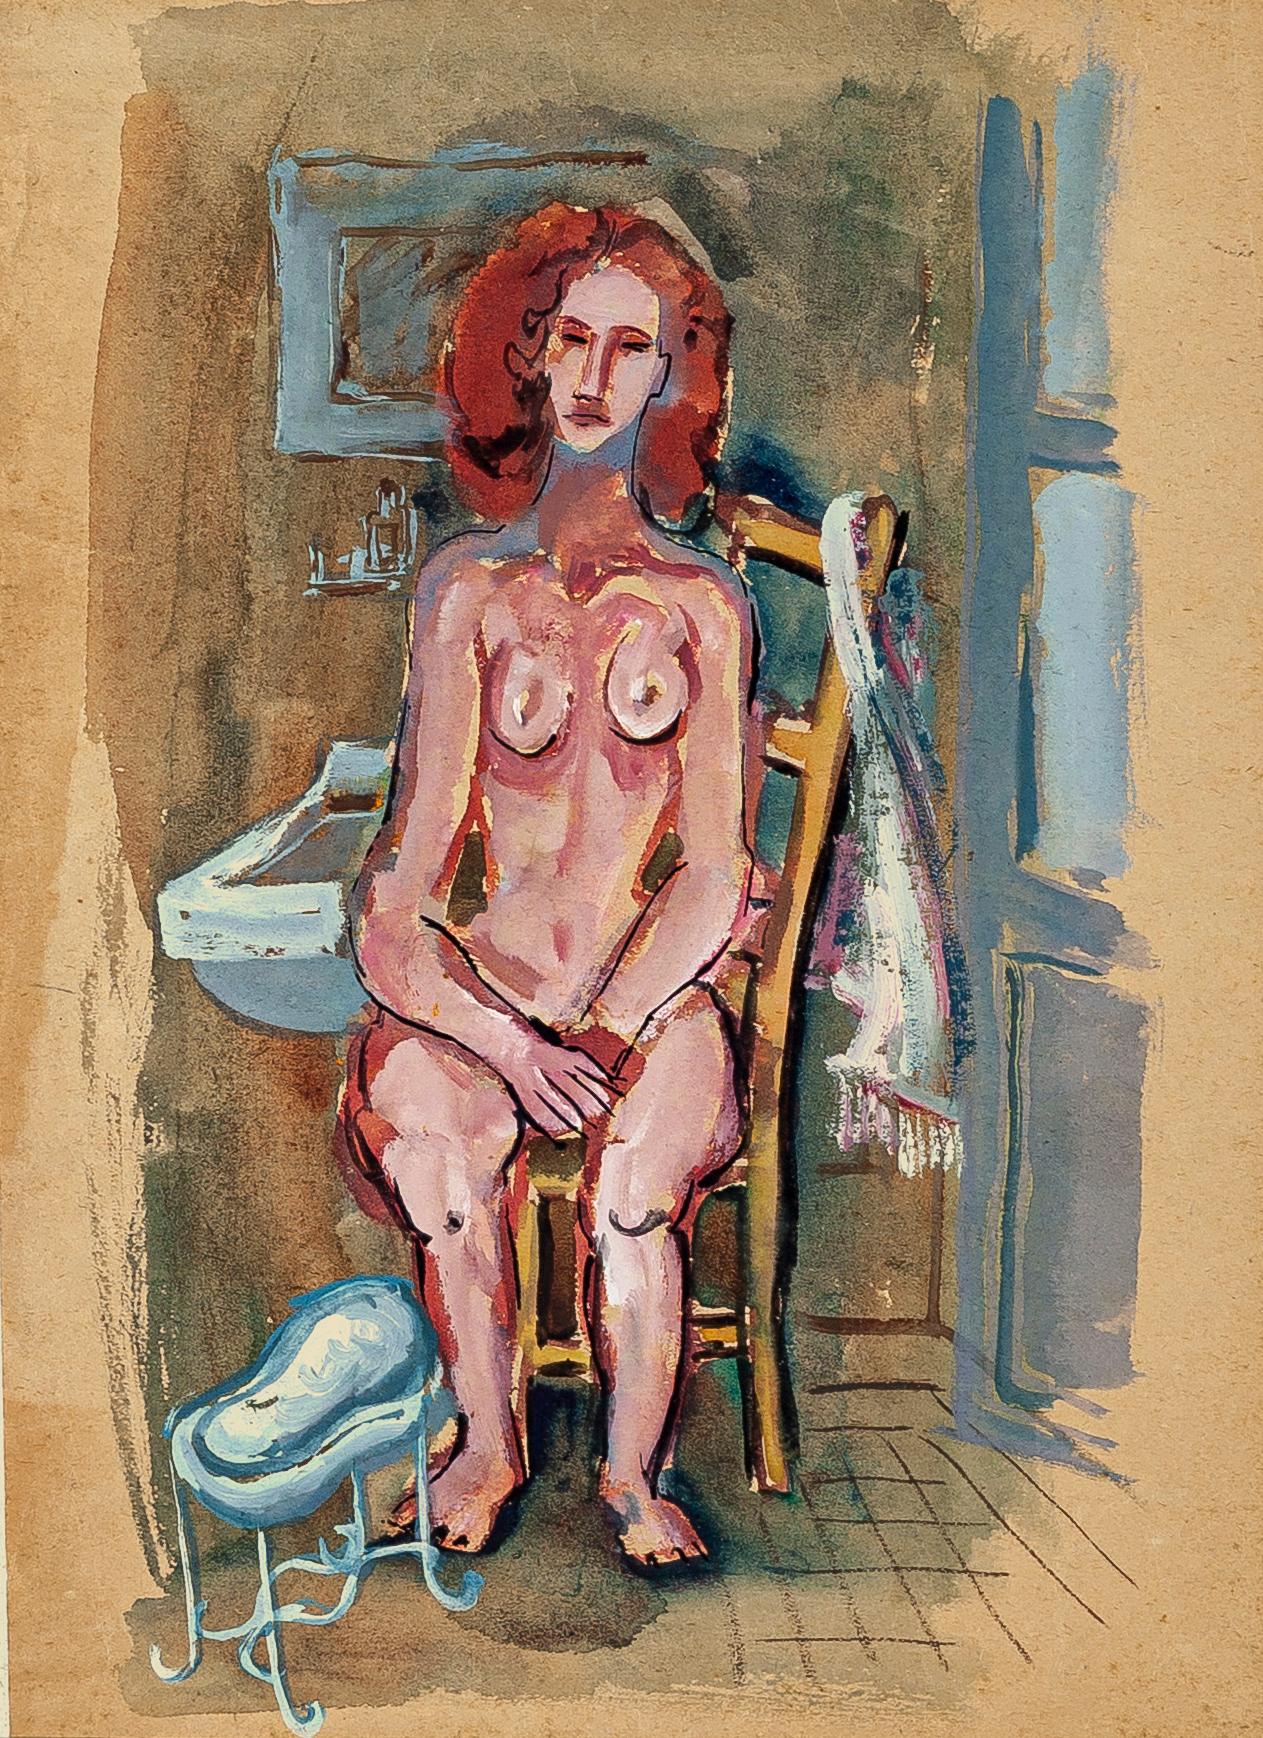 Nude Woman - Original Tempera and Watercolor by Primo Zeglio - 1930s